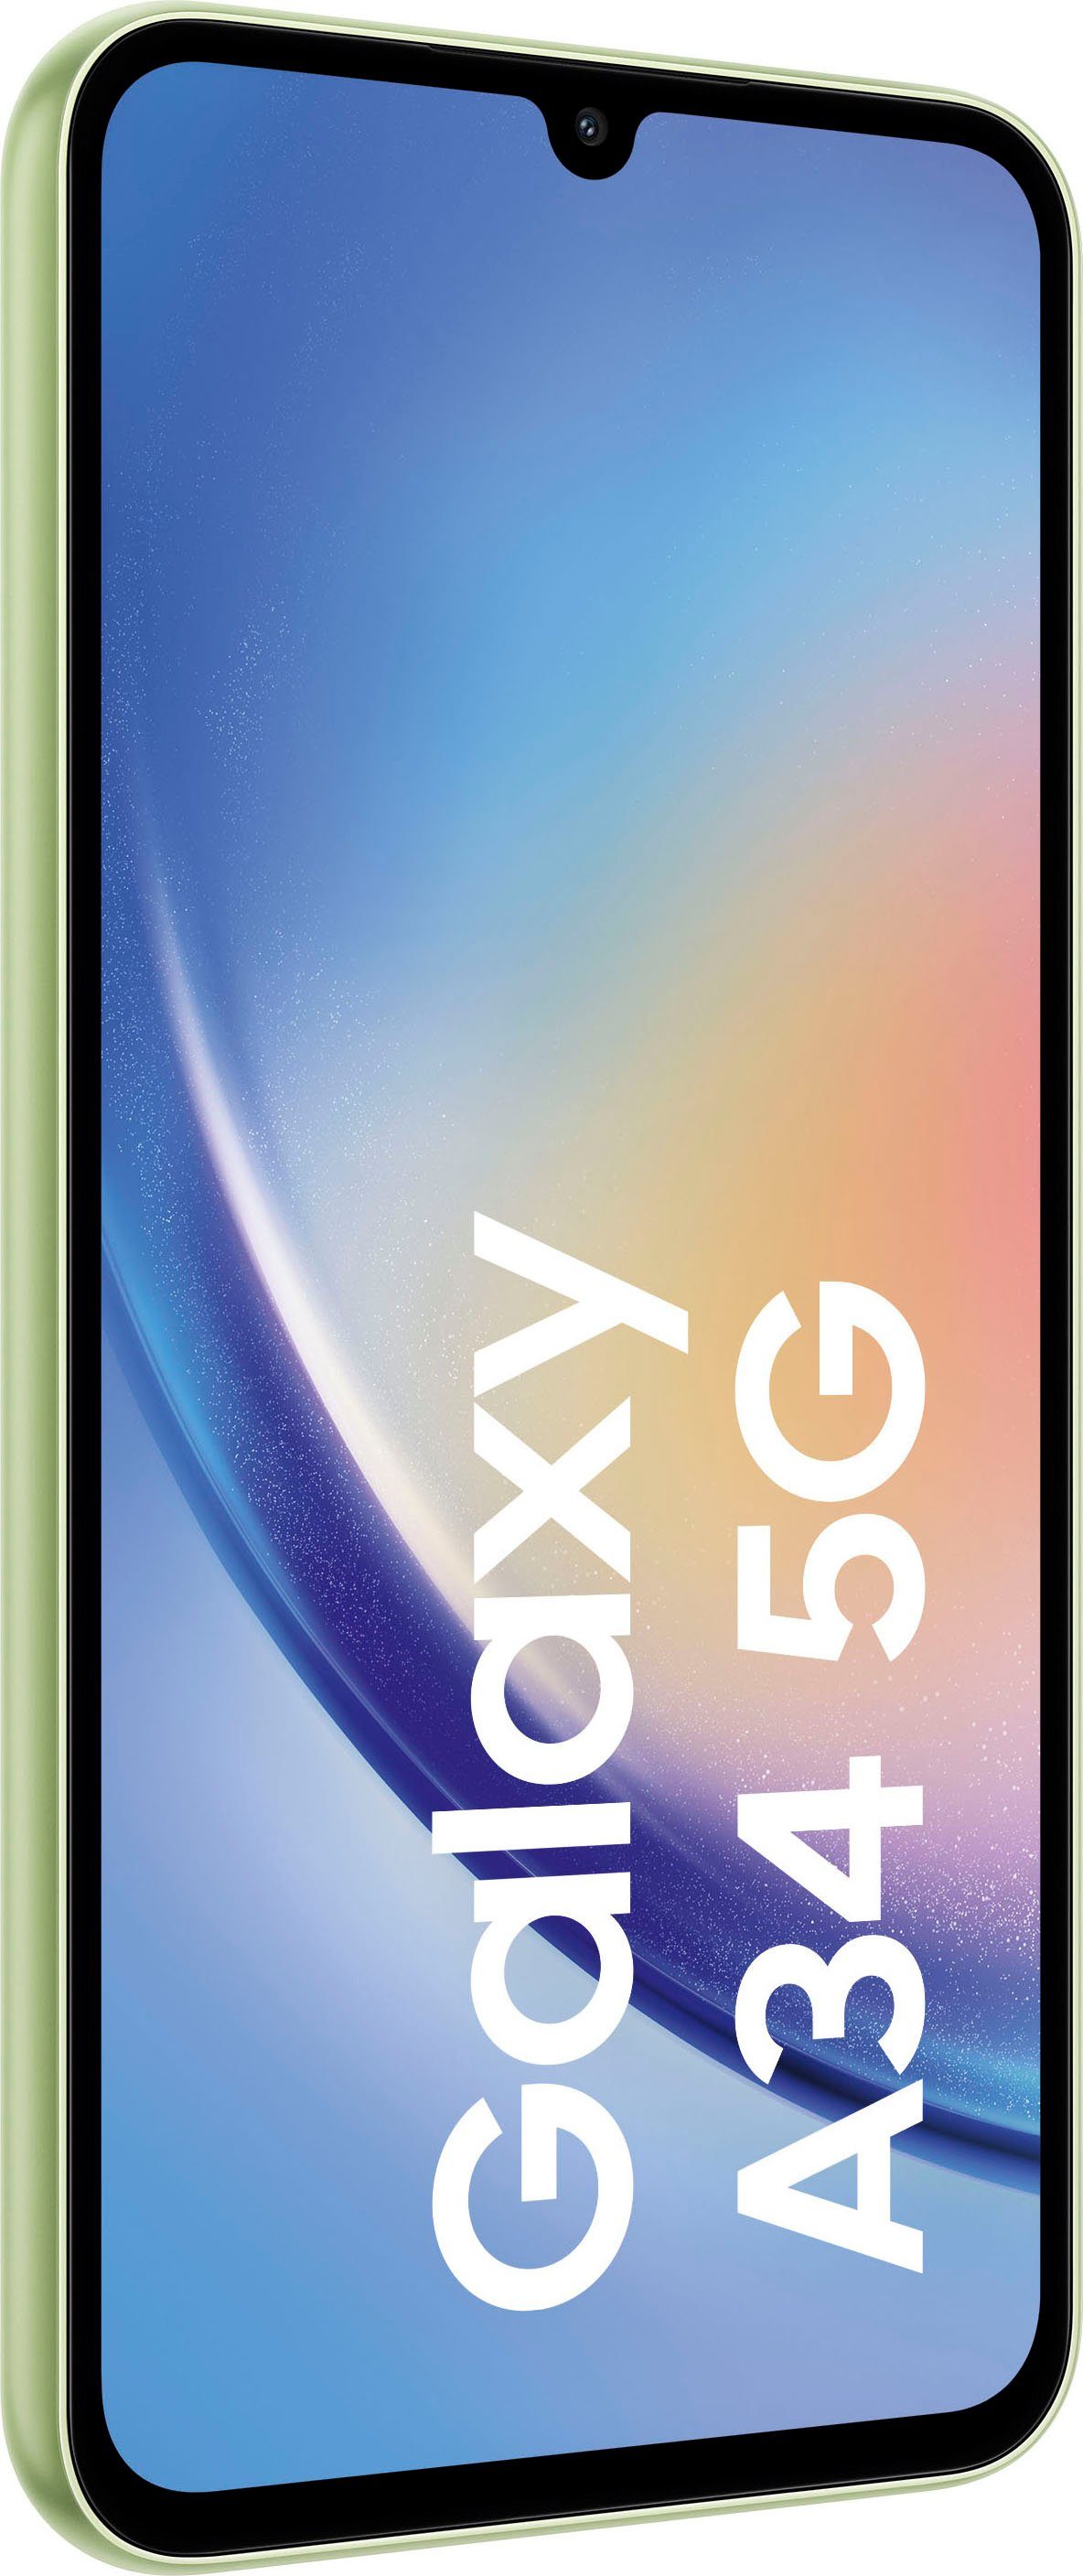 Samsung Galaxy A34 5G 256GB cm/6,6 GB 48 (16,65 256 Kamera) MP Smartphone leicht Speicherplatz, Zoll, grün